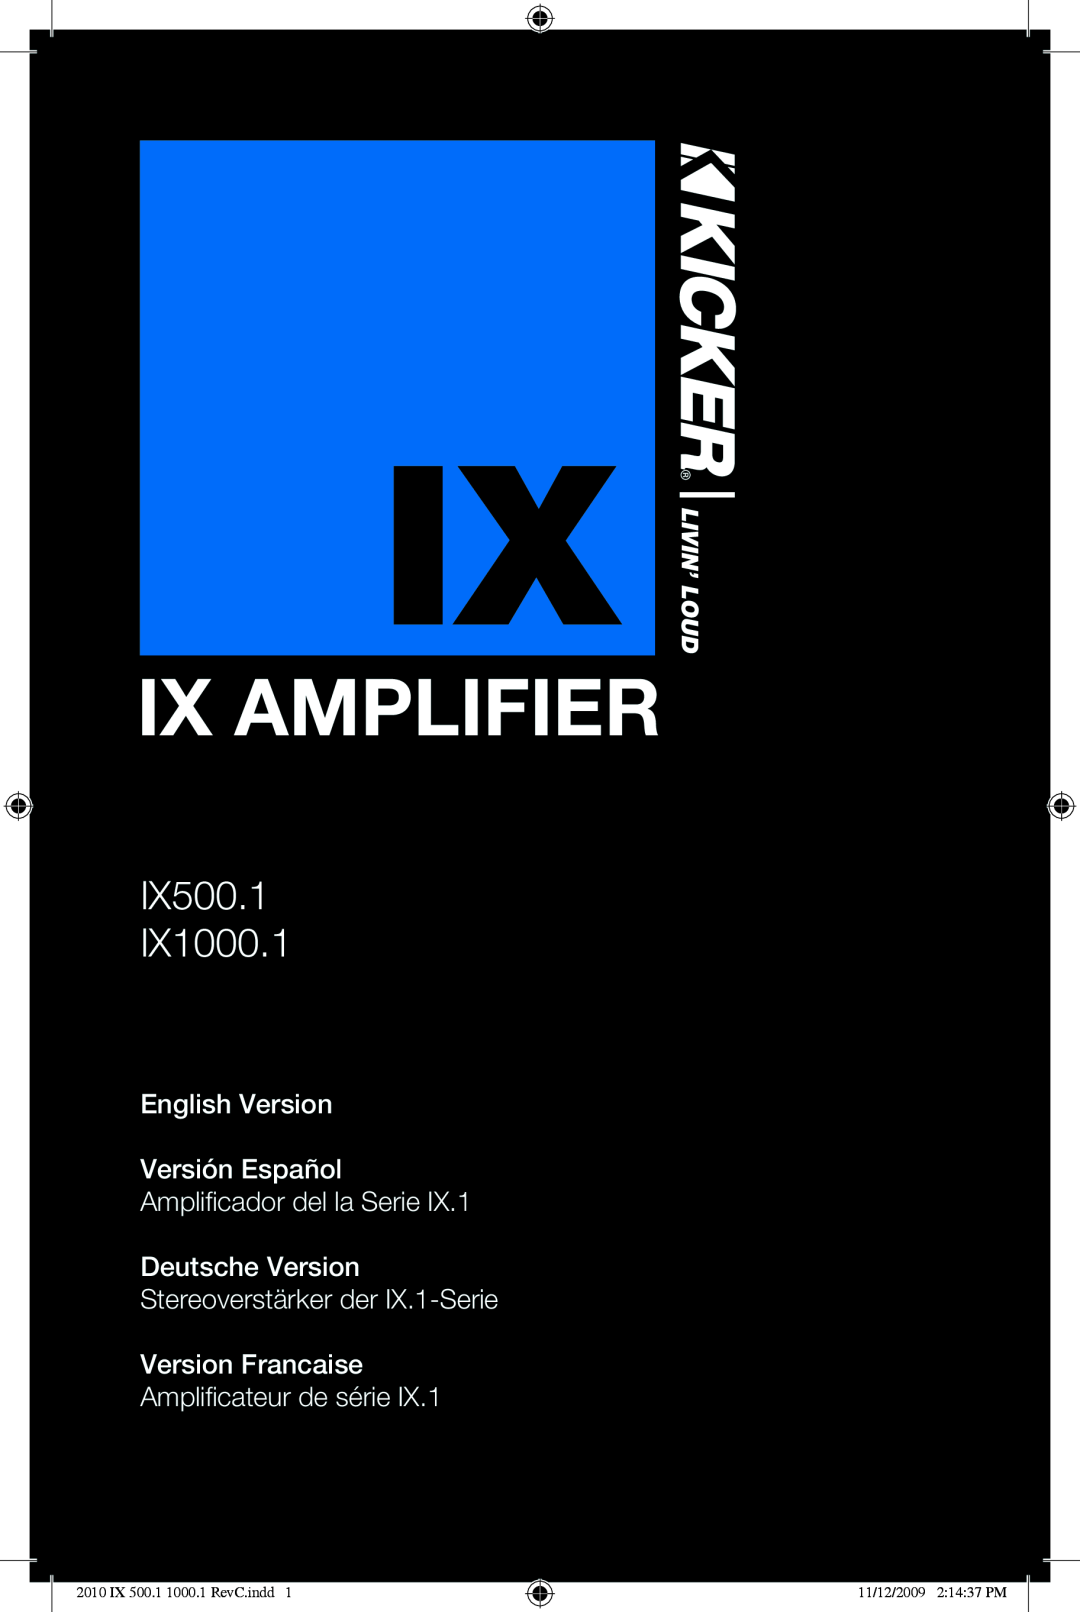 Kicker 10IX1000.1 manual Ix Amplifier, IX500.1, English Version Versión Español, Amplificateur de série, Livin’ Loud 